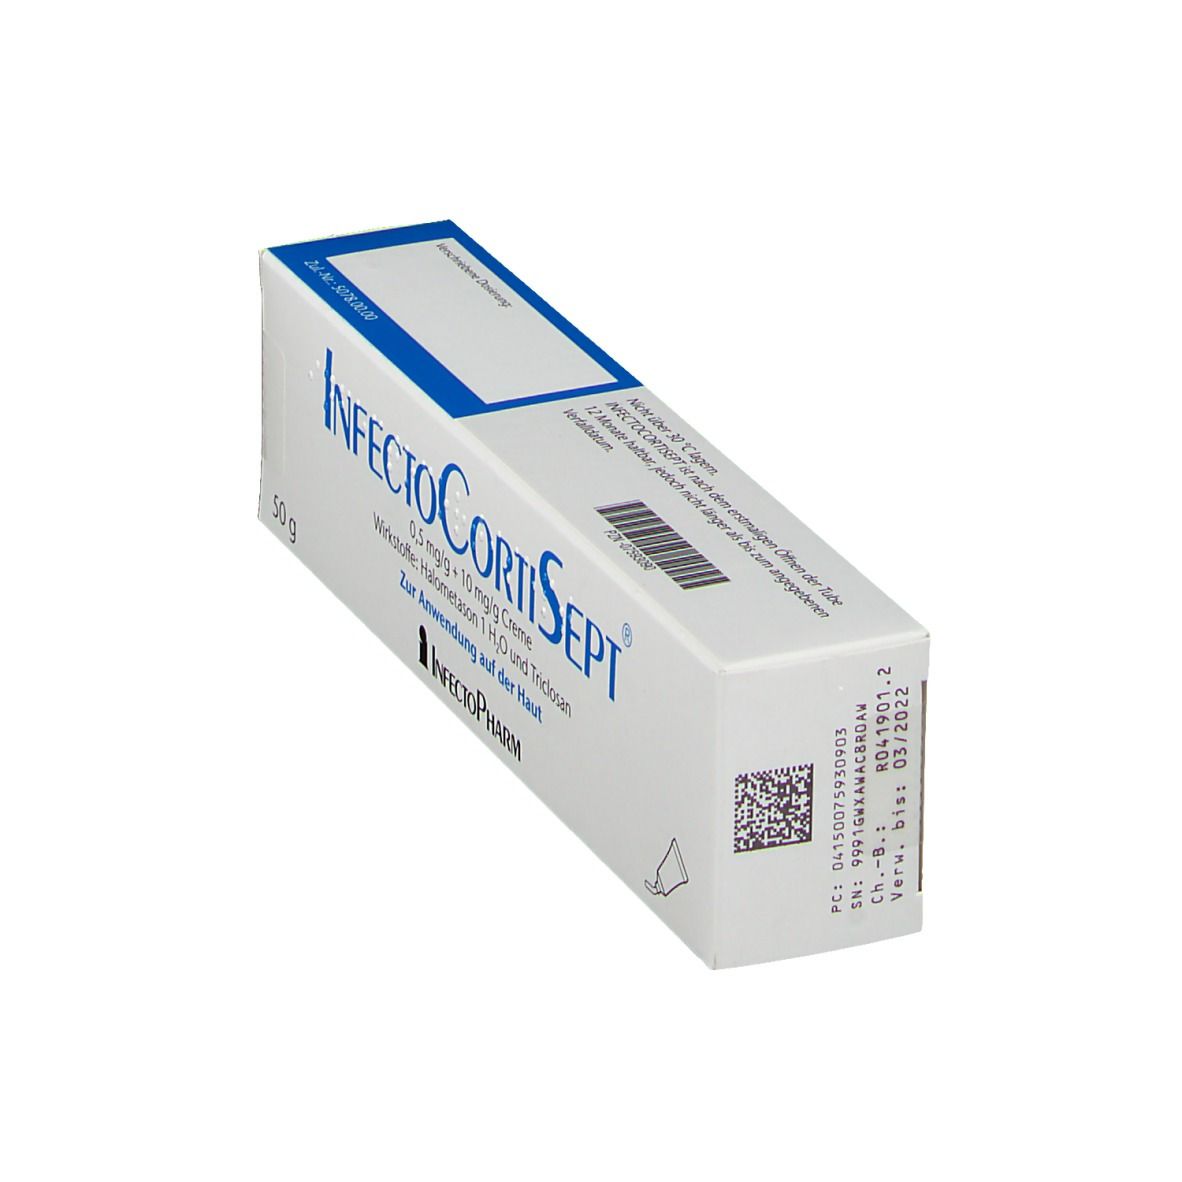 InfectoCortiSept® 0,5 mg/g + 10 mg/g 50 g mit dem E-Rezept kaufen - SHOP  APOTHEKE